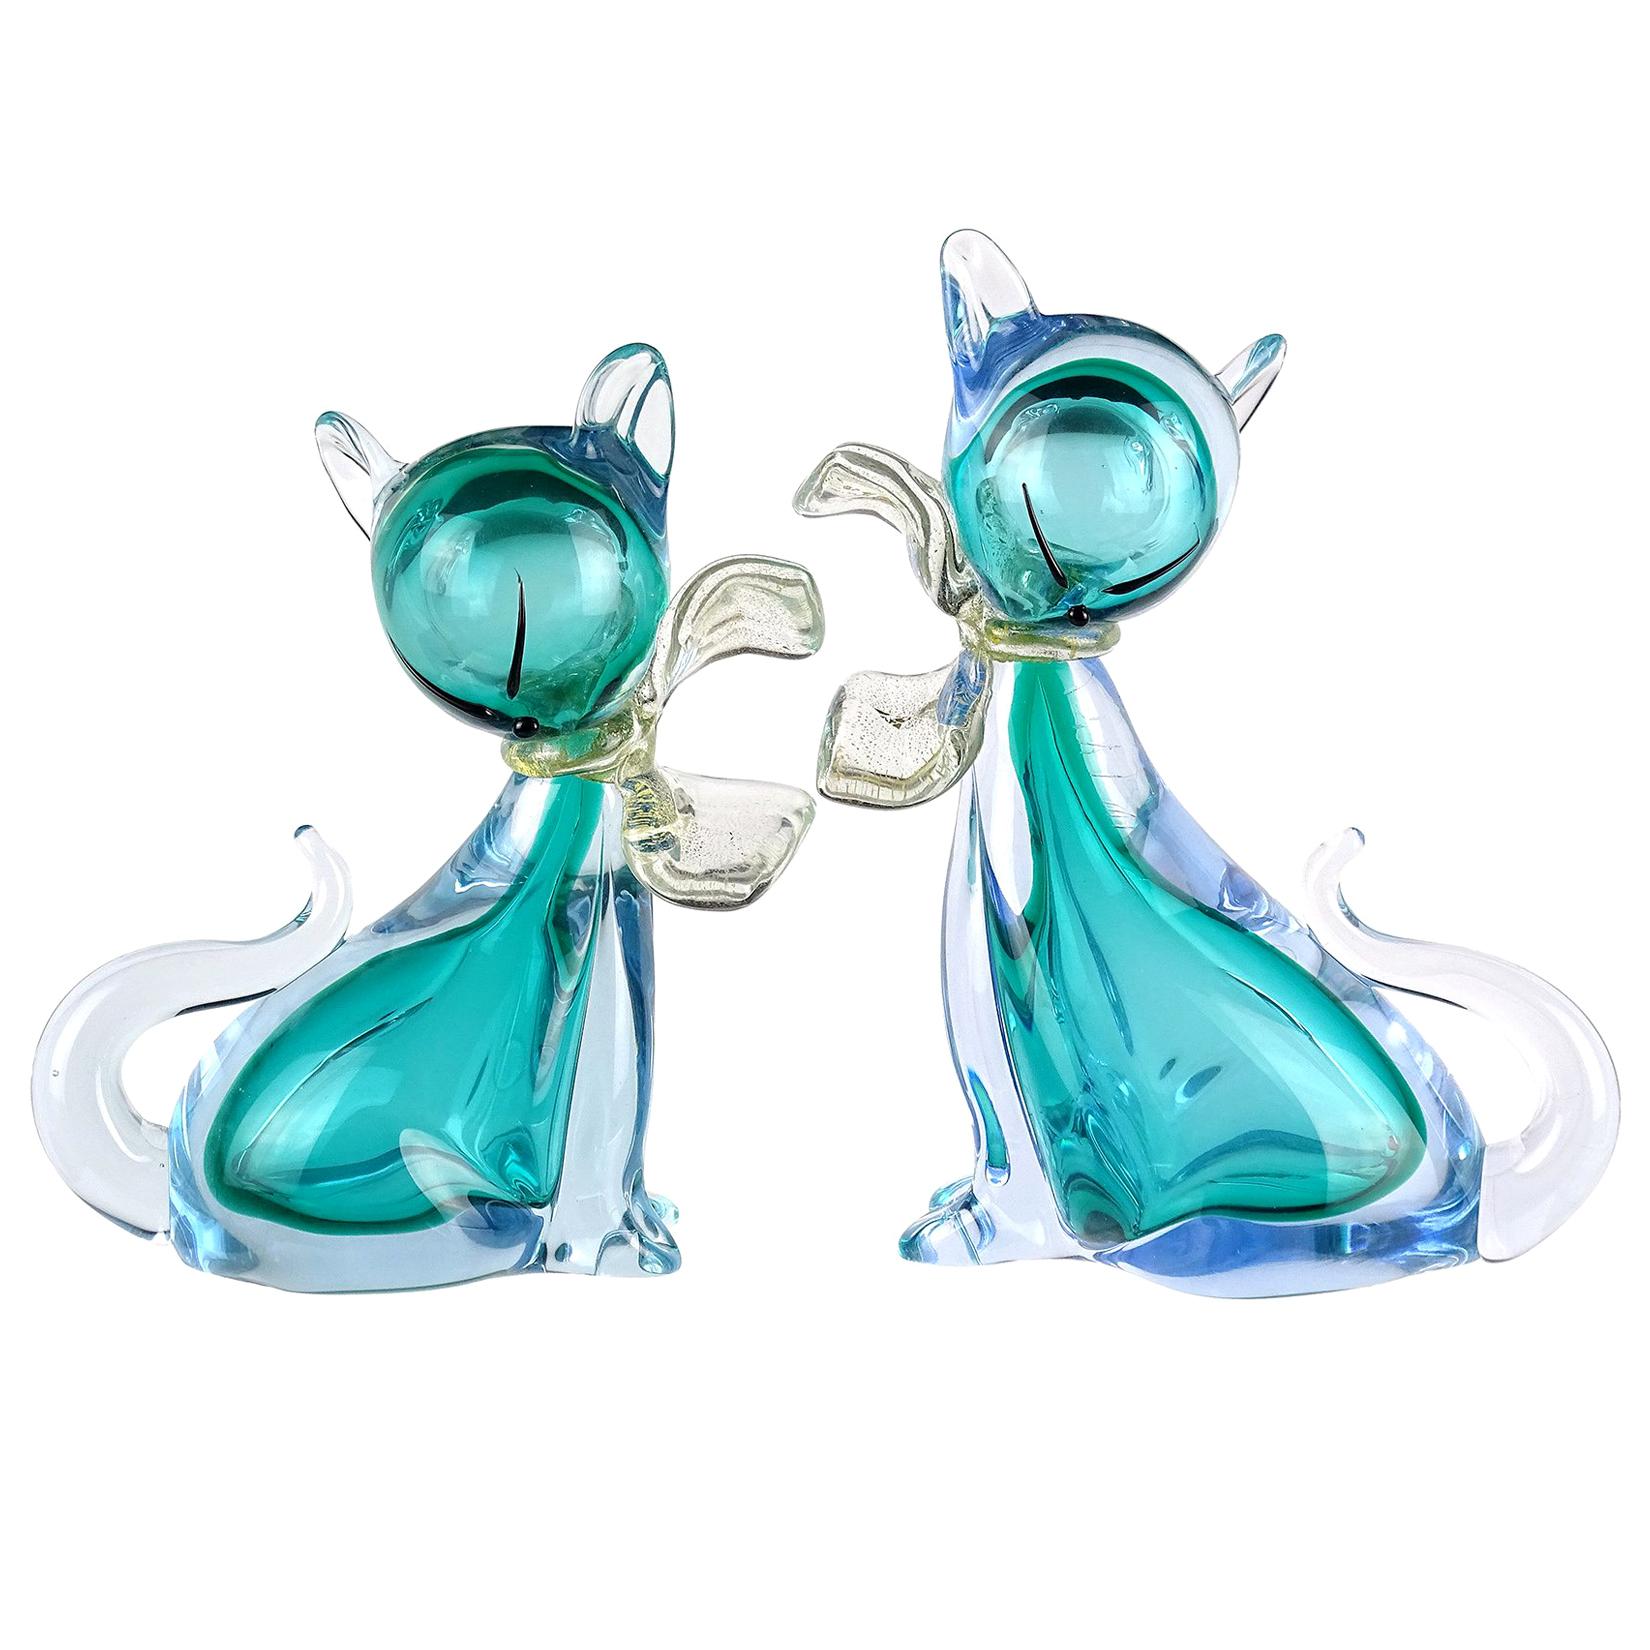 Alfredo Barbini Murano Sommerso Aqua Blue Italian Art Glass Kitty Cat Figurines